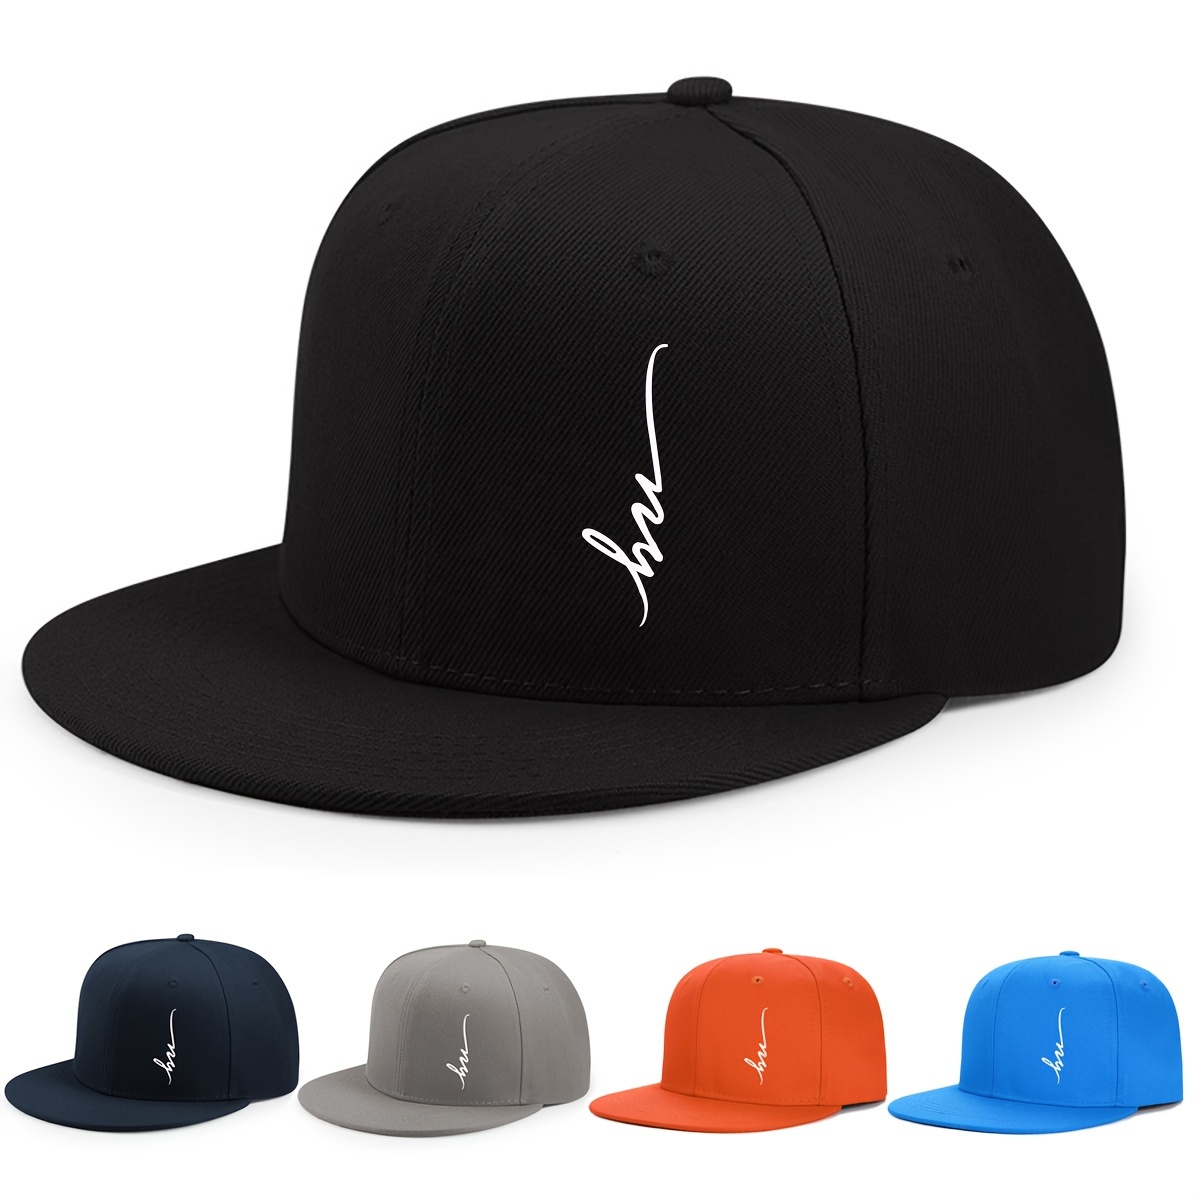 

Unisex Hip-hop Style Baseball Cap - Adjustable, Sun-protective & Trendy Snapback Hat For Outdoor Fashion